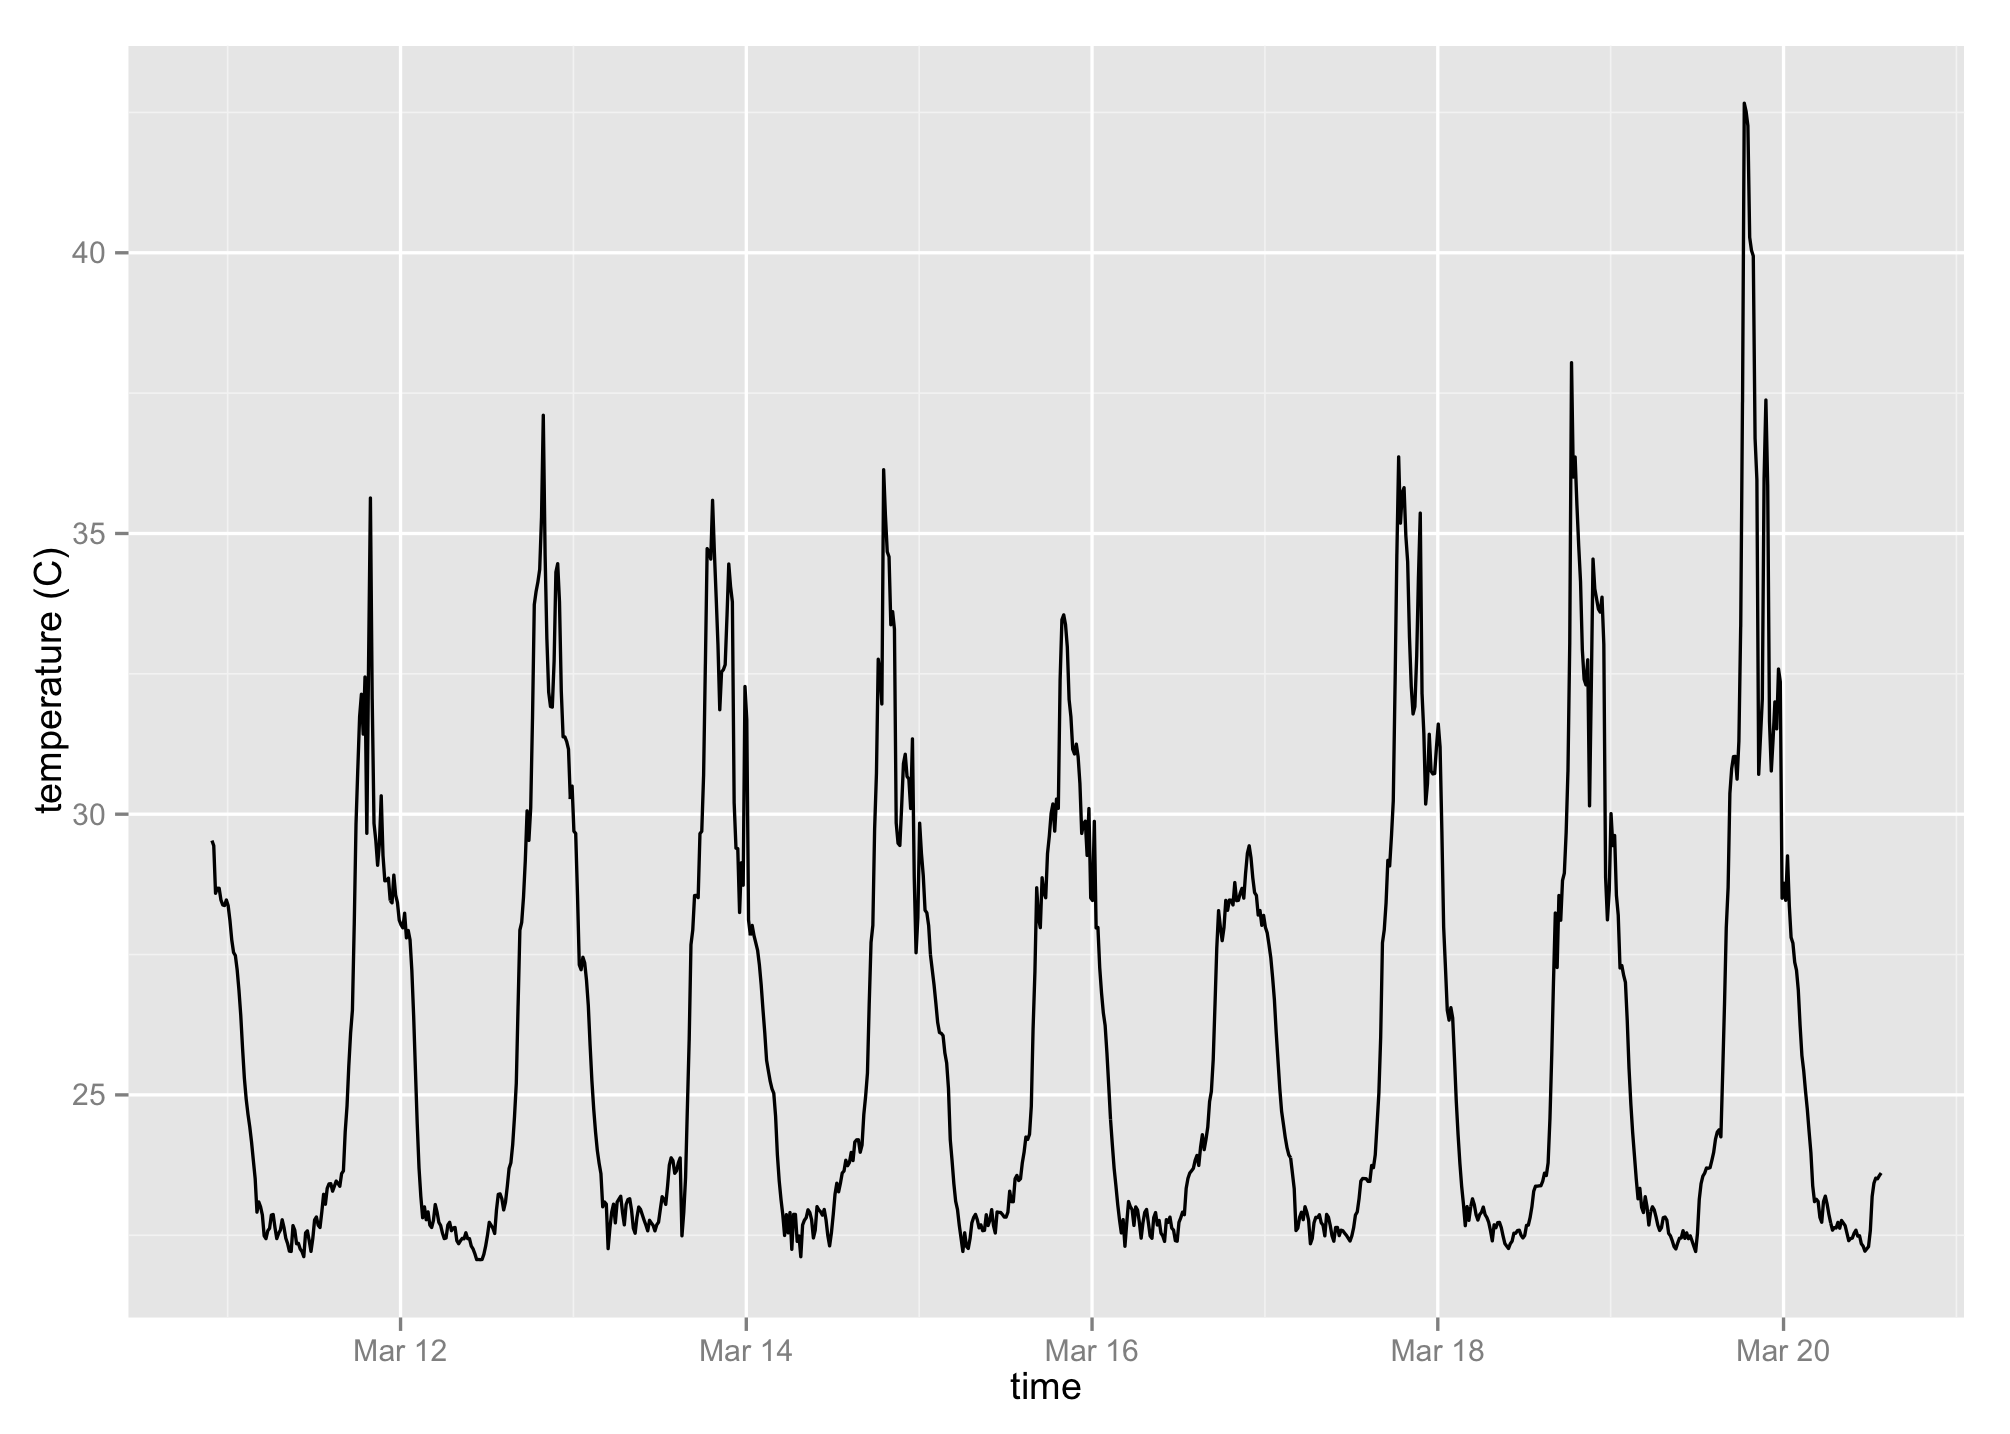 timeseries plot of temperature data from FlowerPower unit